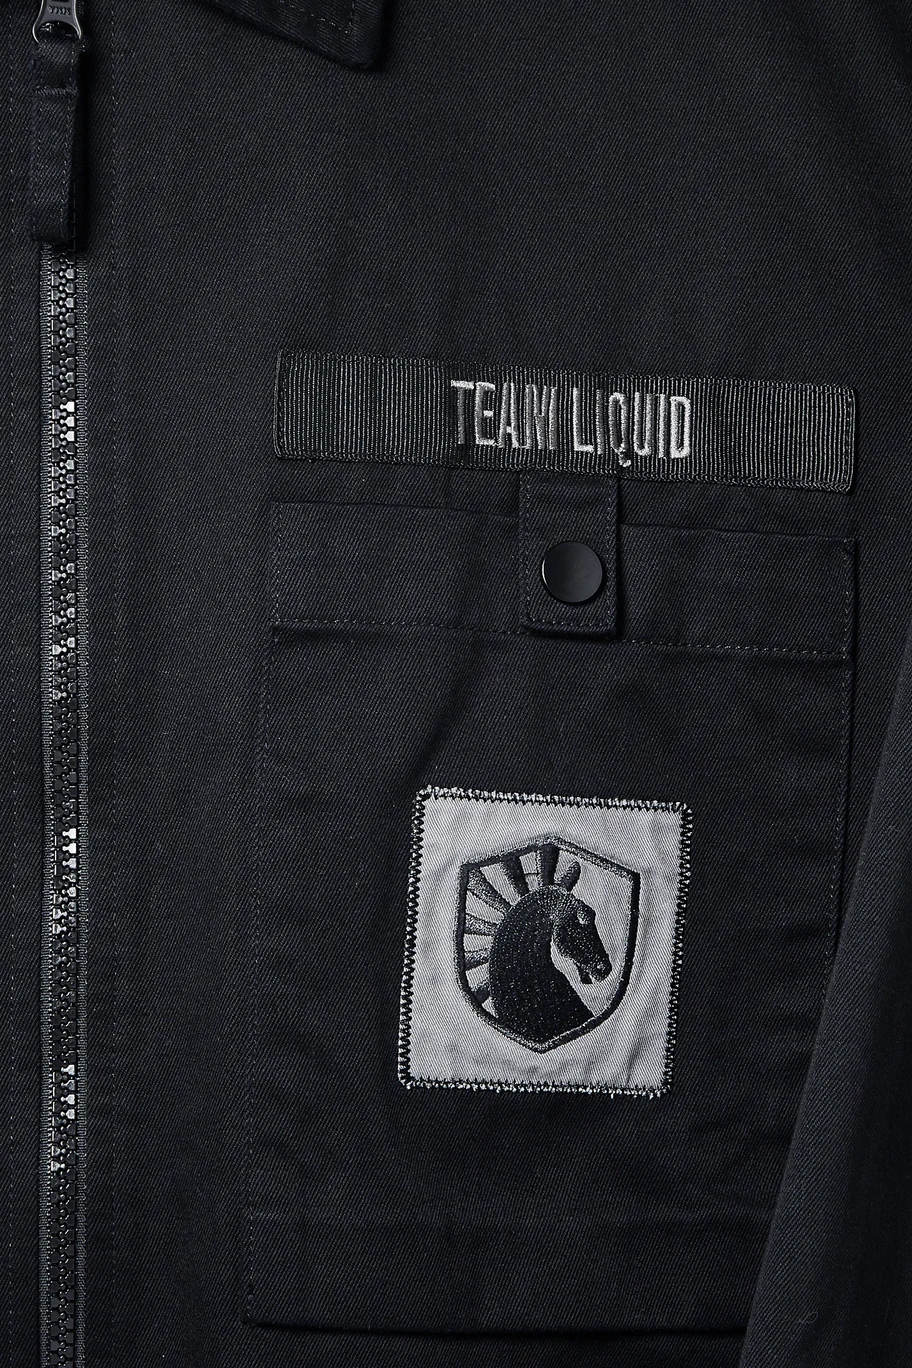 Naruto - Team Liquid x Naruto Kyubi Twill Jacket image count 16